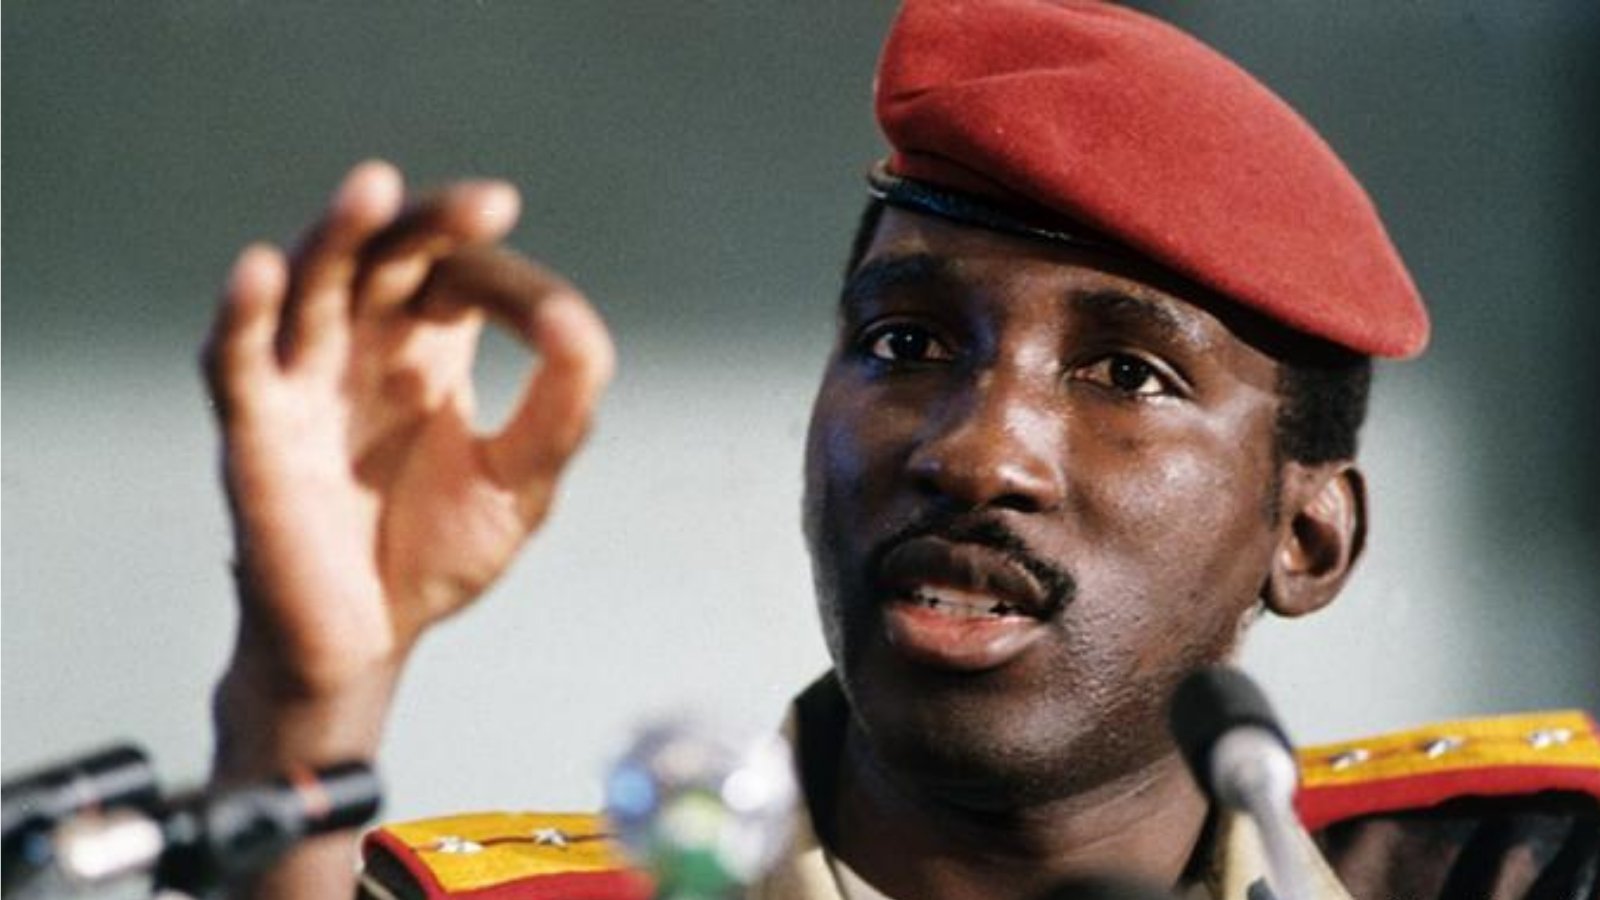 تويتر \ Verso Books على تويتر: August 4th, 1983: Revolutionary Thomas Sankara assumes power in Burkina Faso, nationalizing mineral wealth and redistributing land. “We must dare to invent the future.”